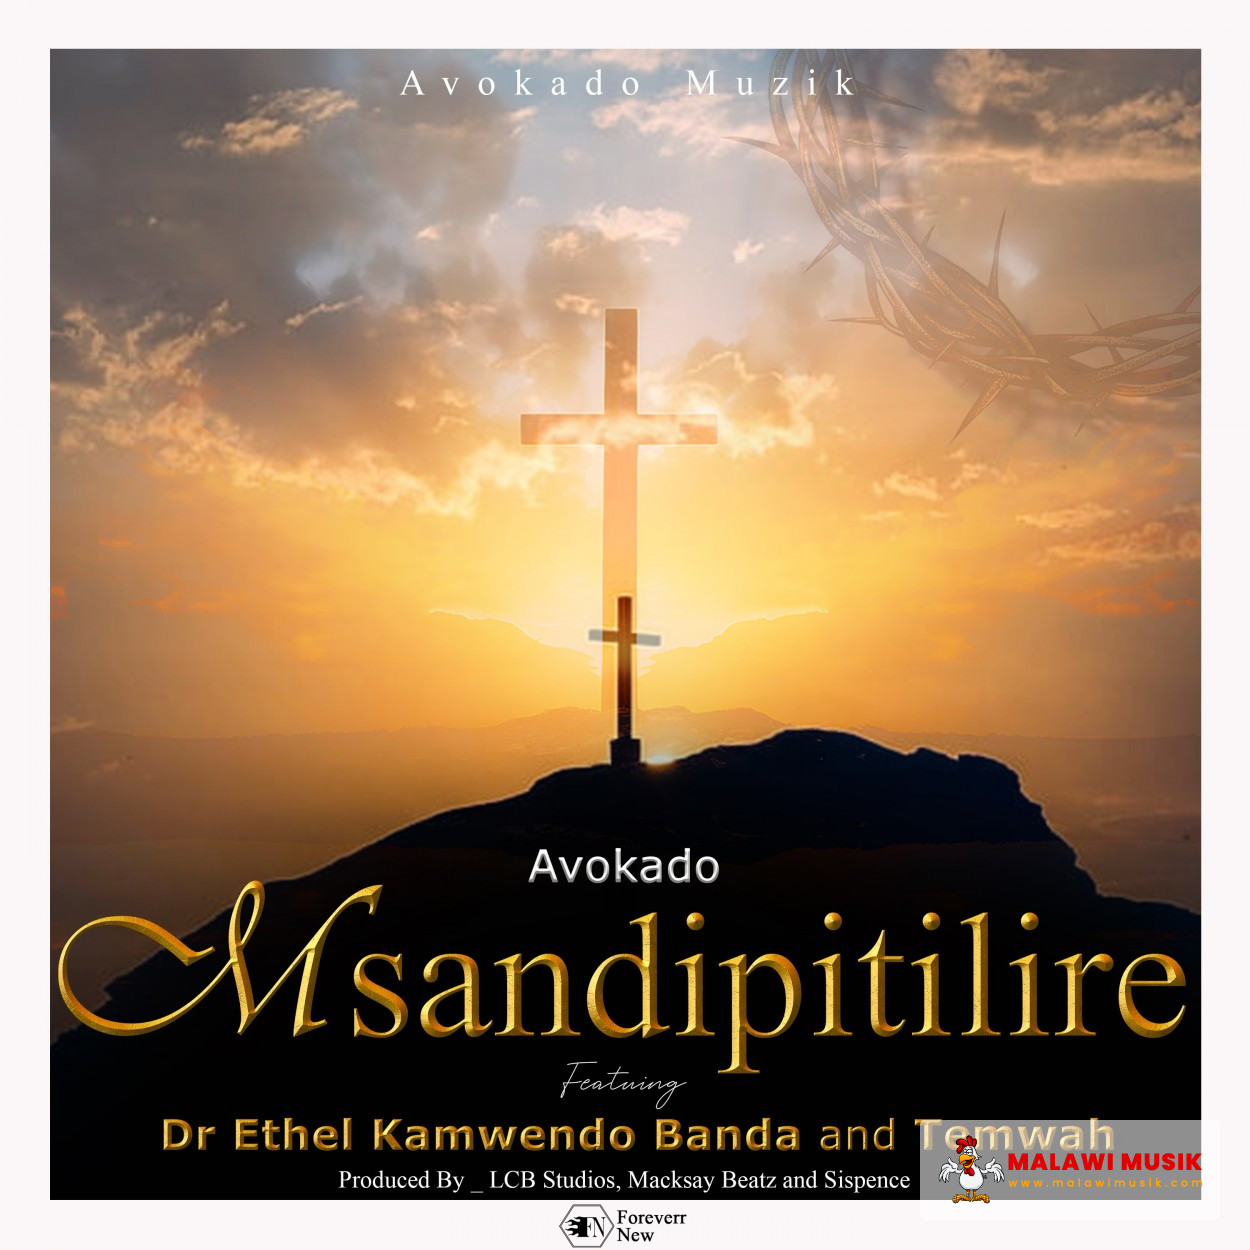 Avokado-Avokado - Msandipitilire Ft Dr Ethel Kamwendo Banda & Temwah-song artwork cover